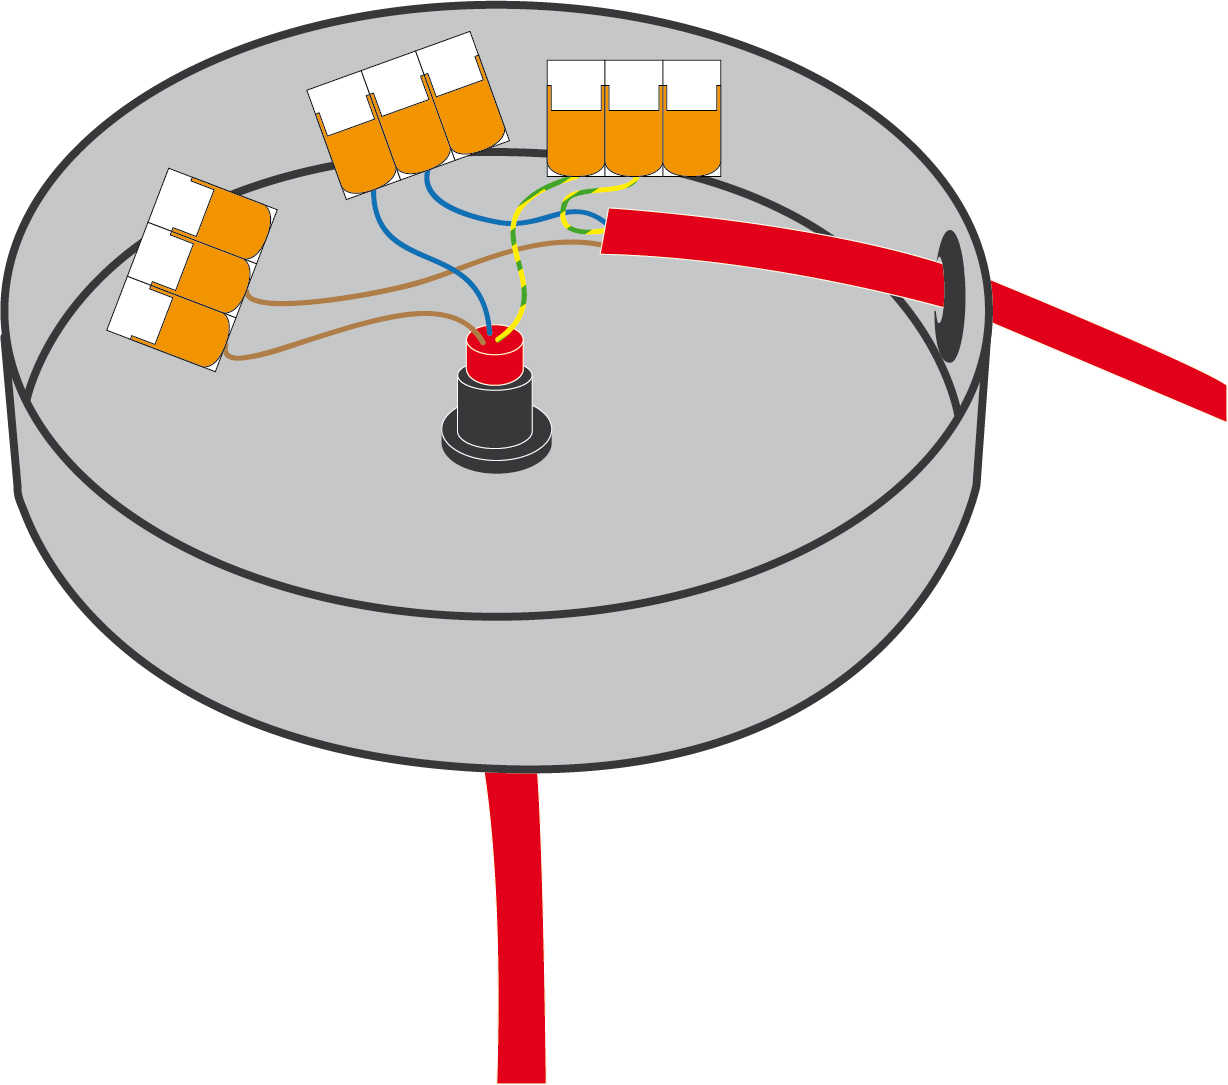 WAGO Verbindungsklemmen um 2, 3 oder 4 JØLG Industrielampen an einen  Anschluss anzubringen